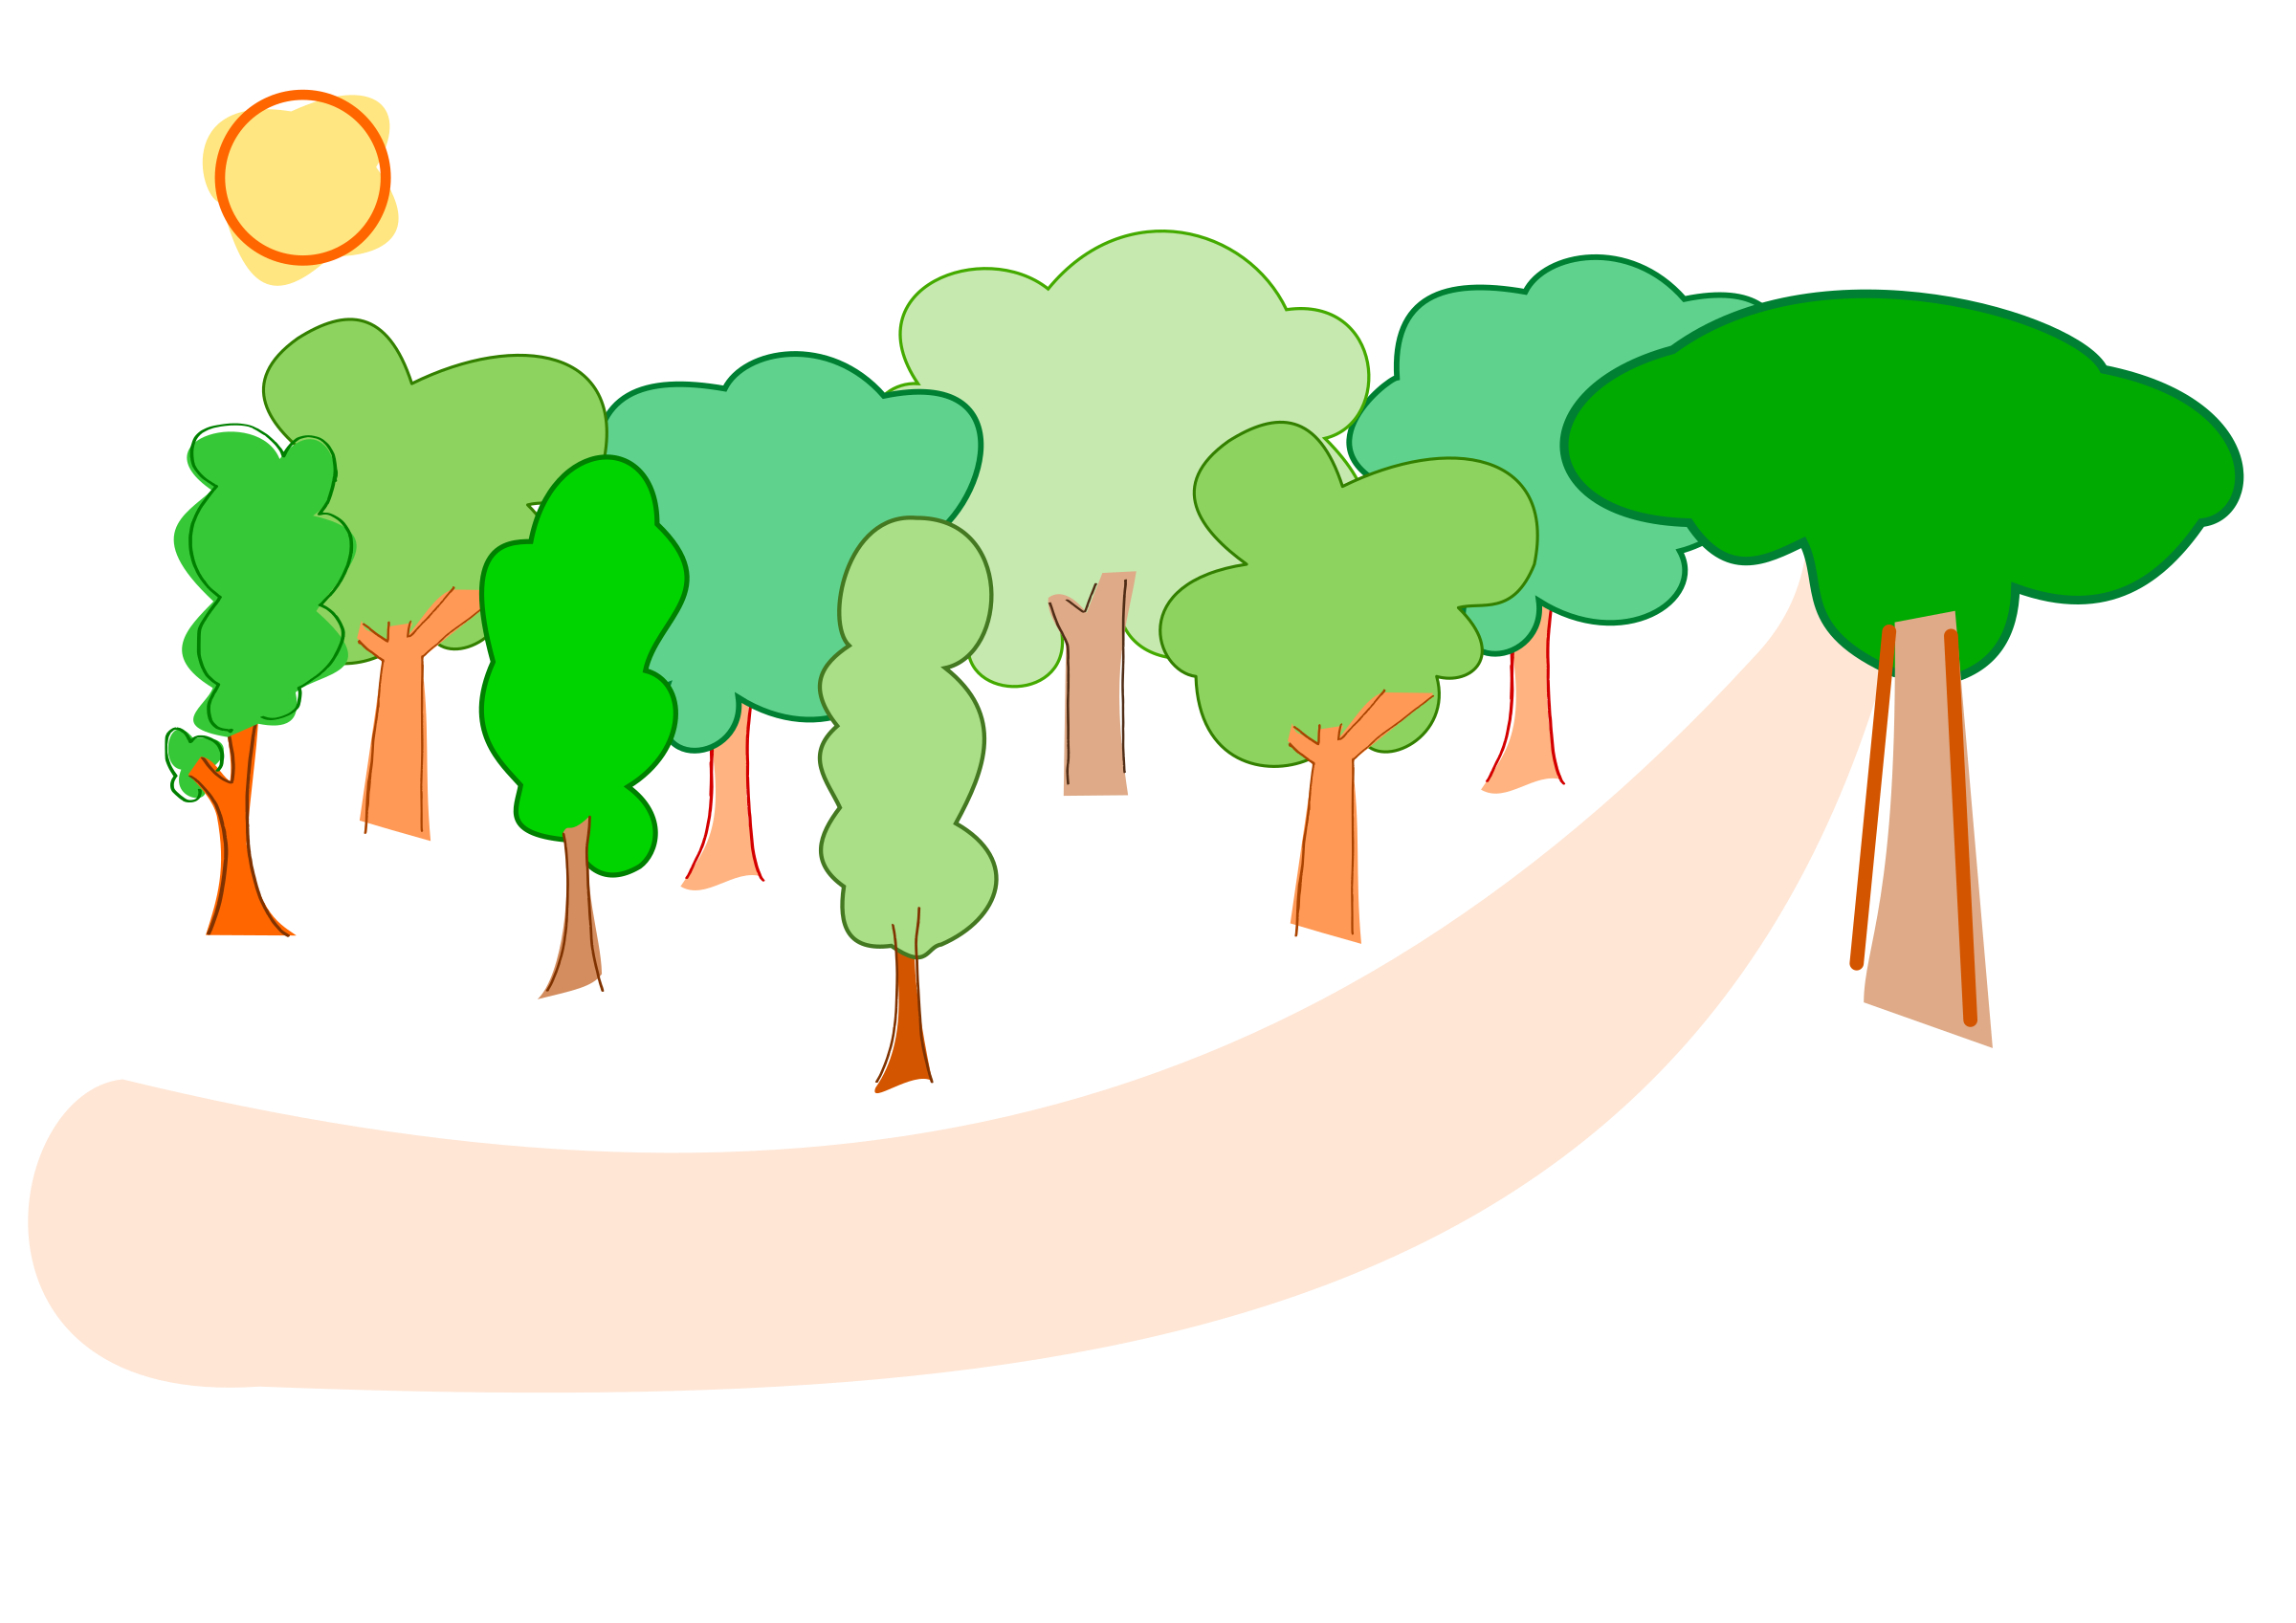 forest clipart illustration